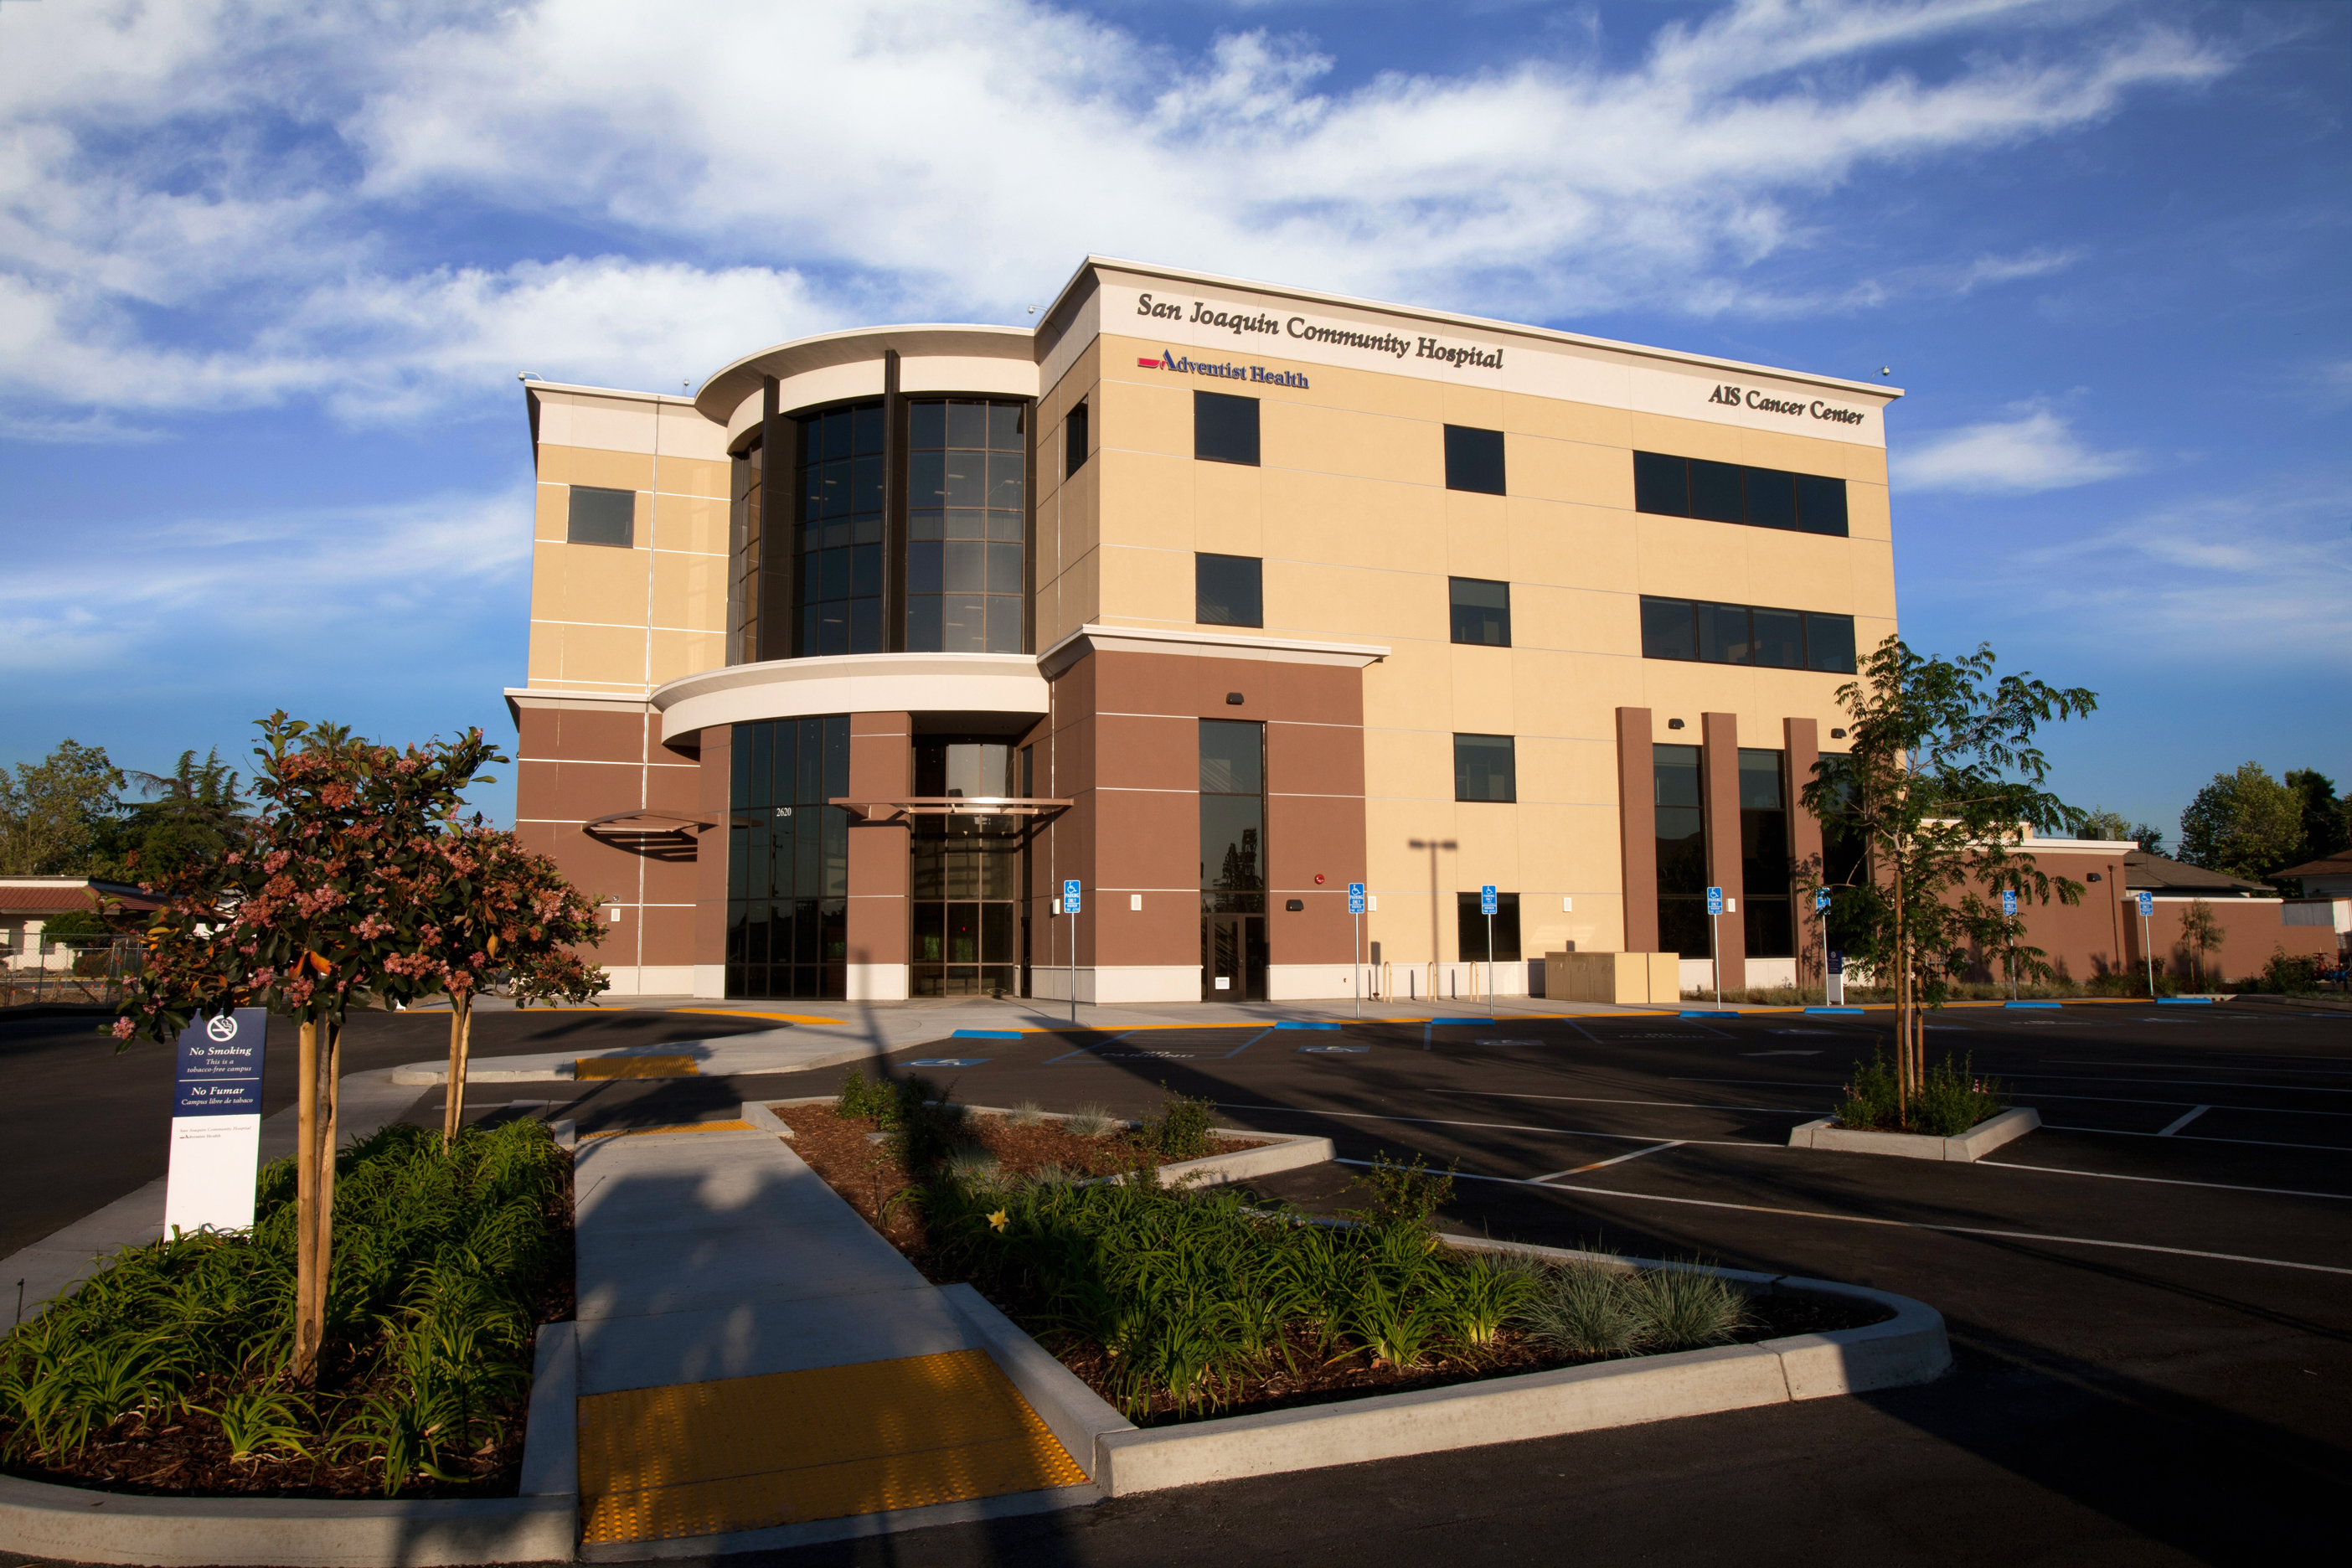 AIS Cancer Center at San Joaquin Community Hospital 2620 Chester Ave